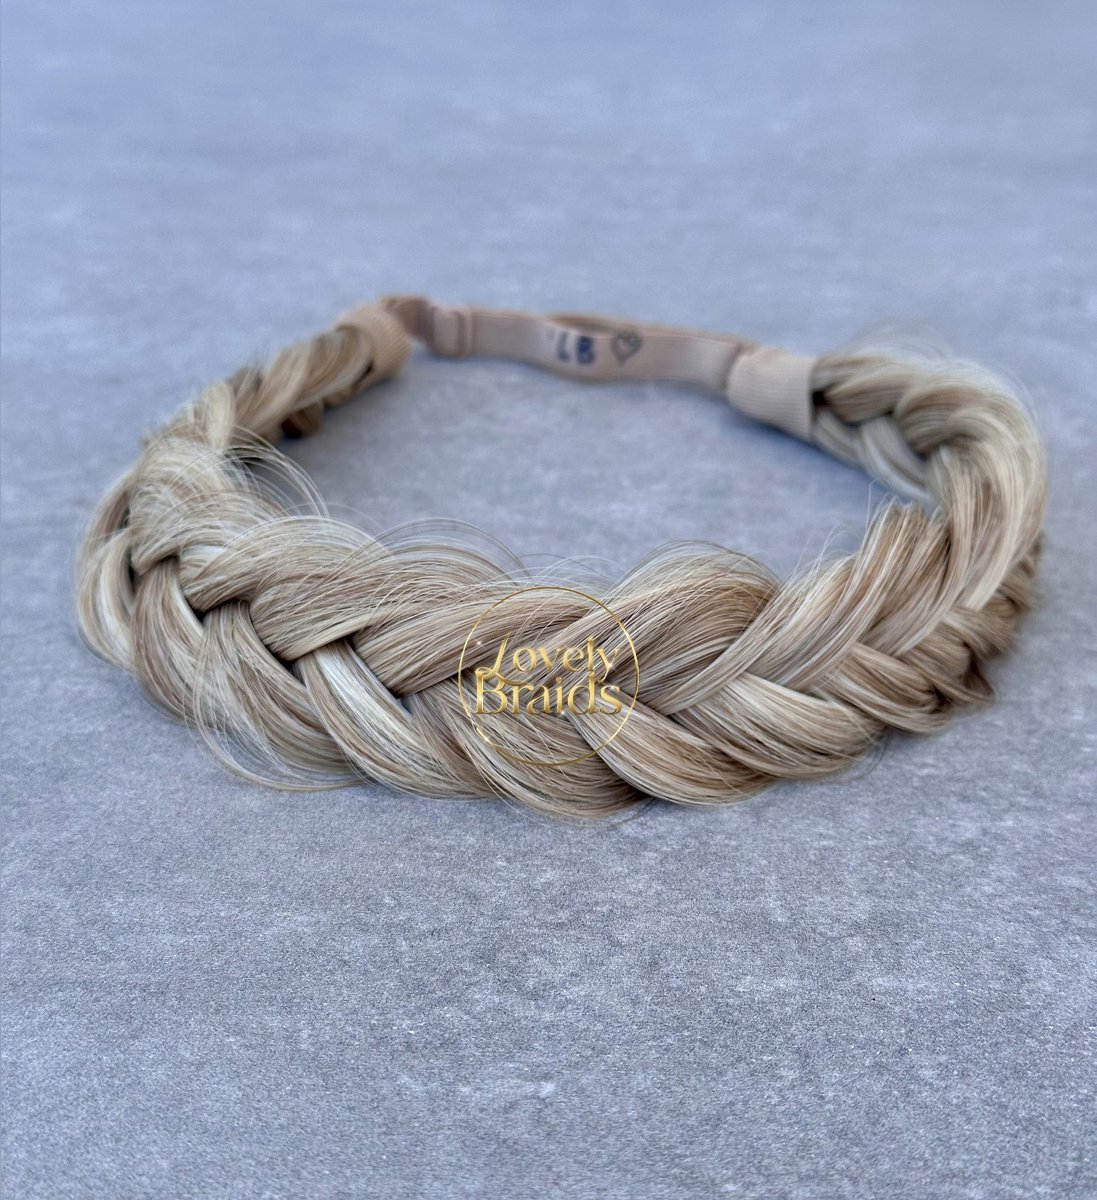 Lovely braids -Stockholm sunshine -gevlochten haarband - vlecht haarband - haarband vlecht